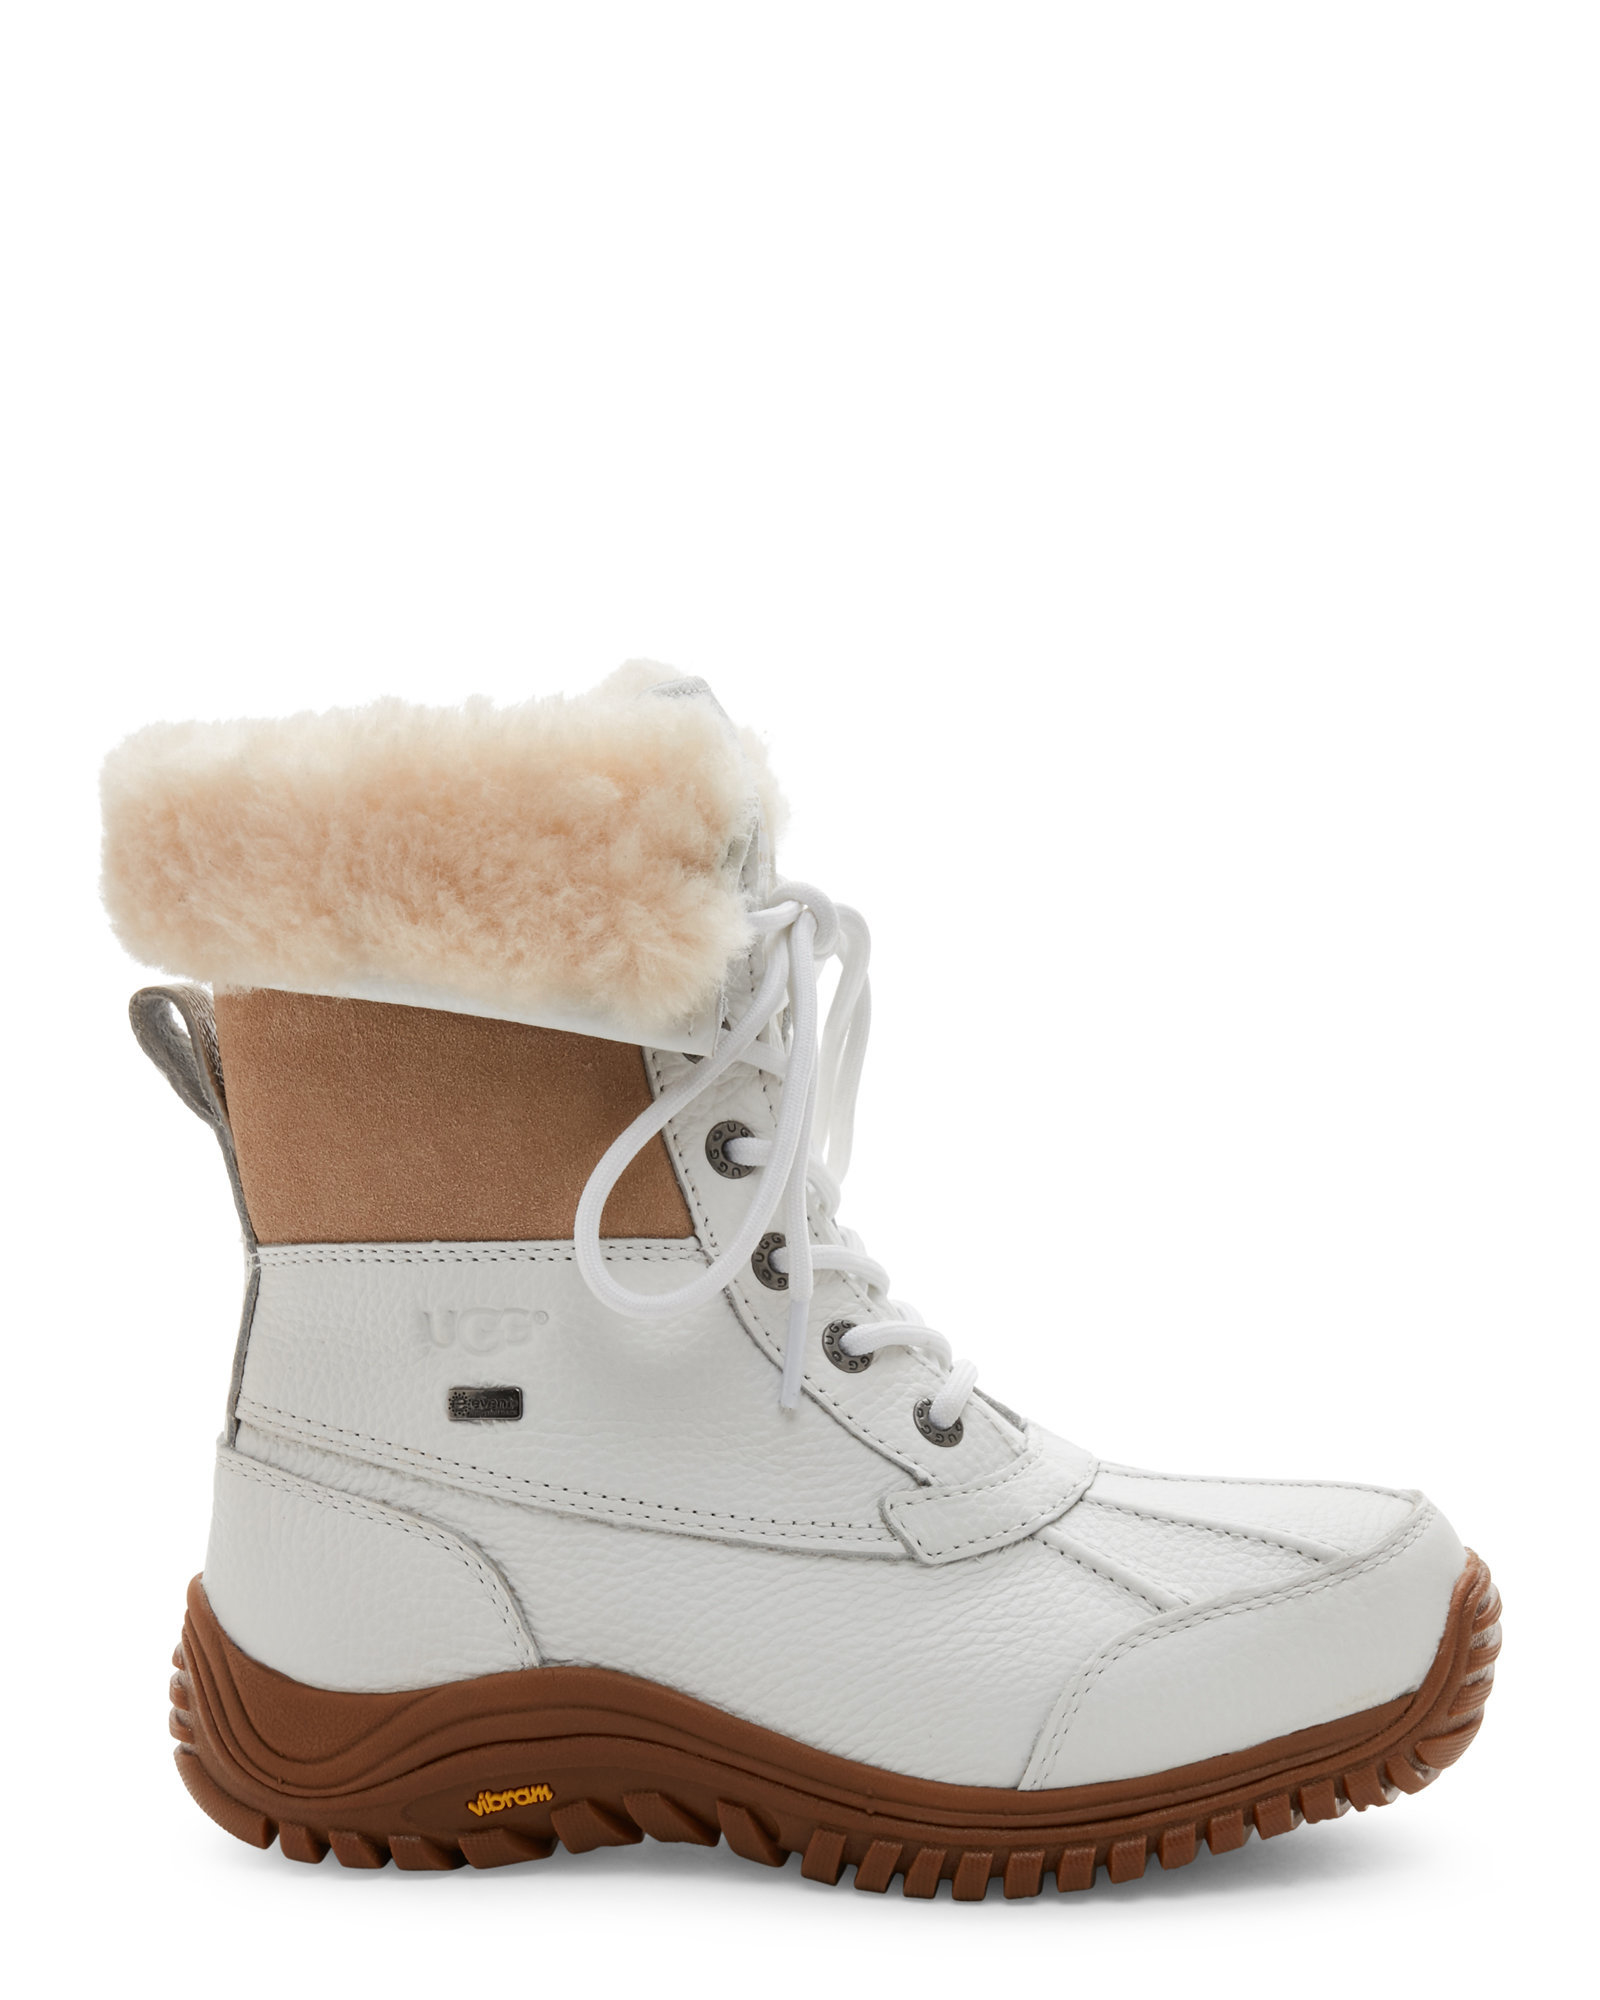 Lyst - UGG White Adirondack Ii Boots in White